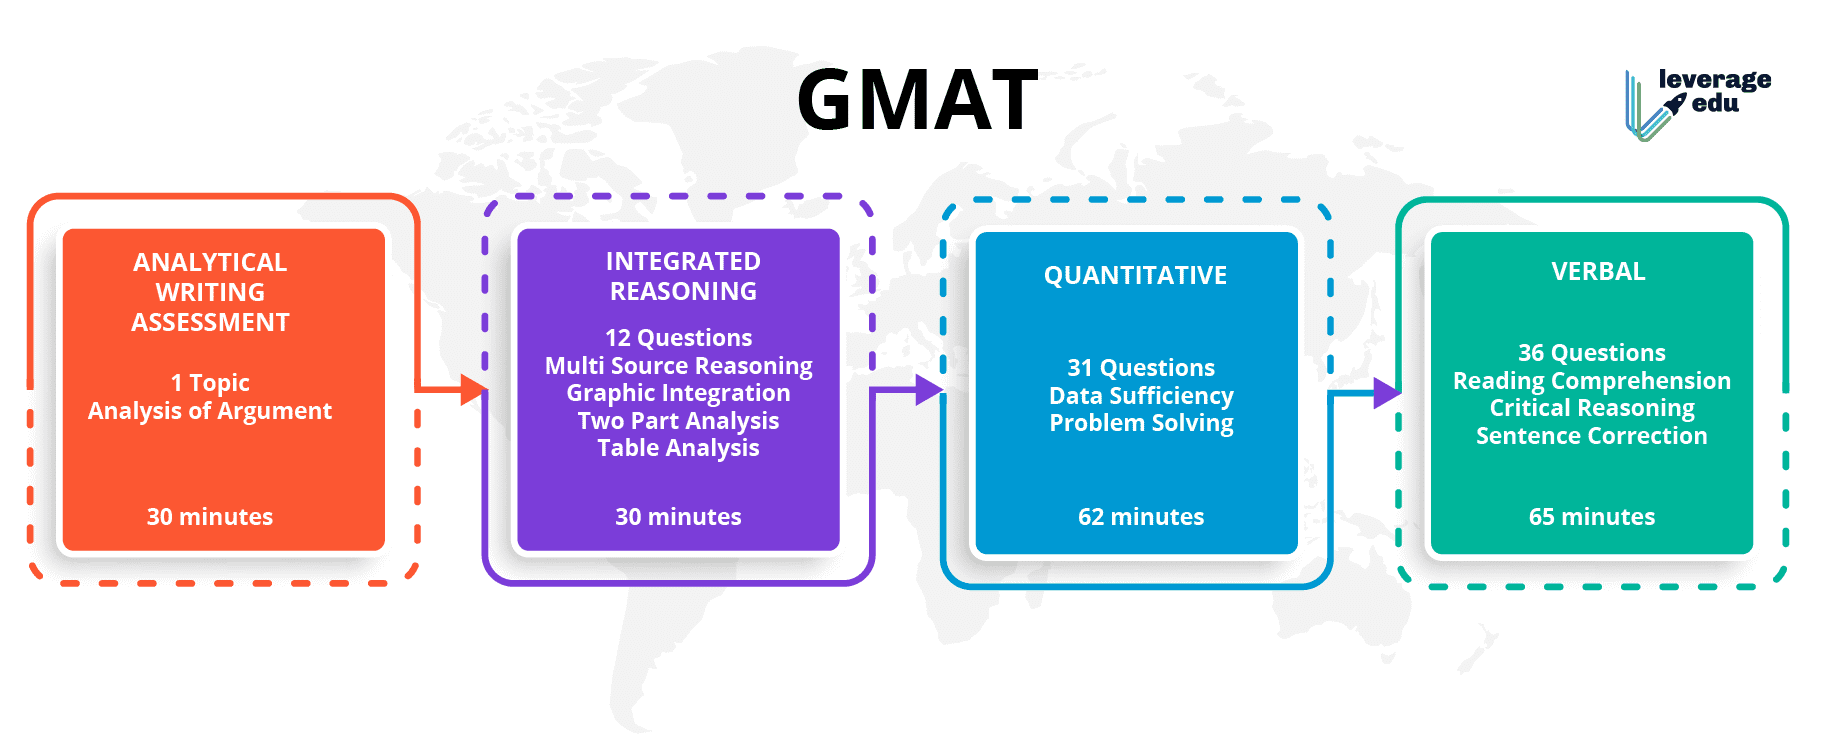 gmat-syllabus-2021-updated-version-leverage-edu